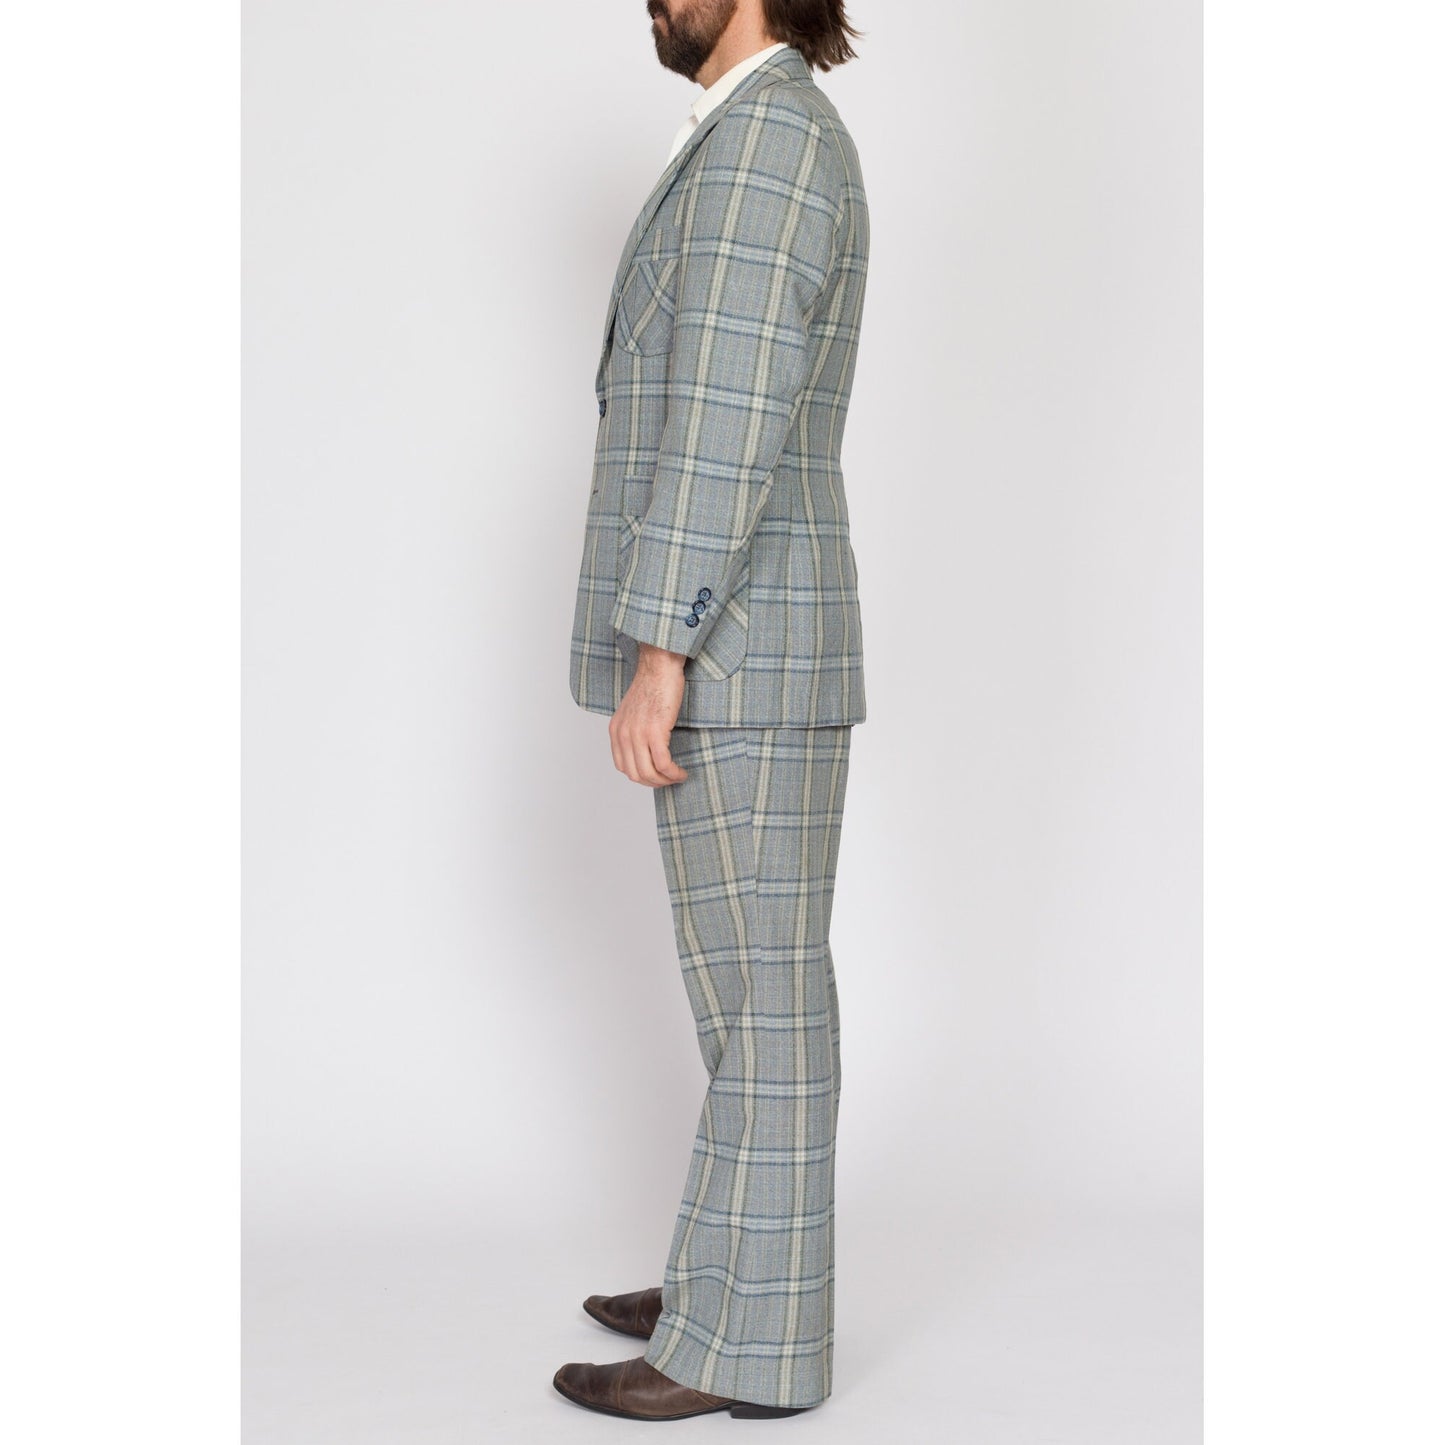 Medium 70s Blue Plaid Suit Set | Vintage Jacket & Bootcut Trousers Matching Two Piece Formal Outfit